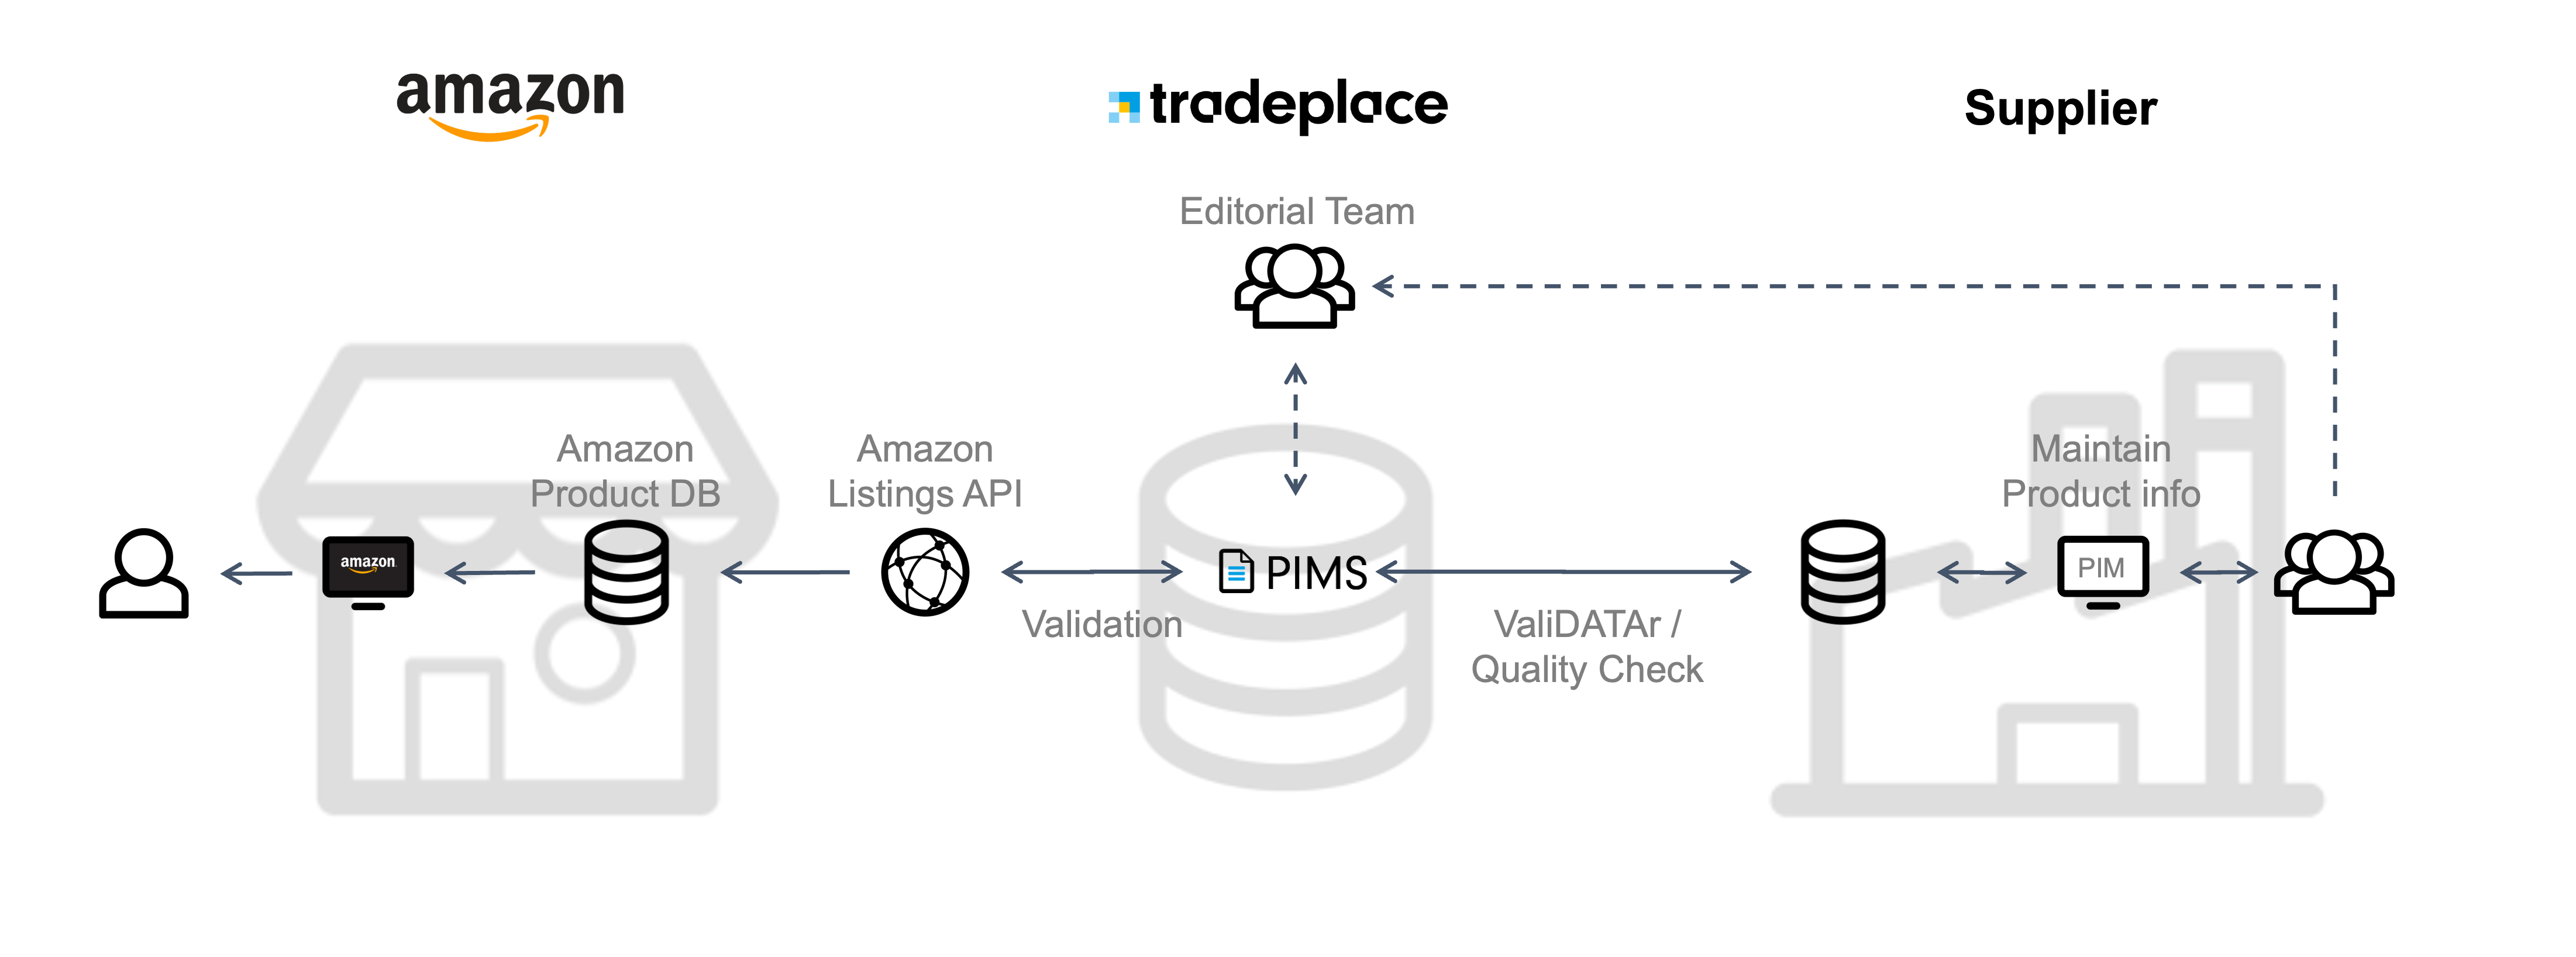 Tradeplace_Amazon_Listings_API_editorial_team